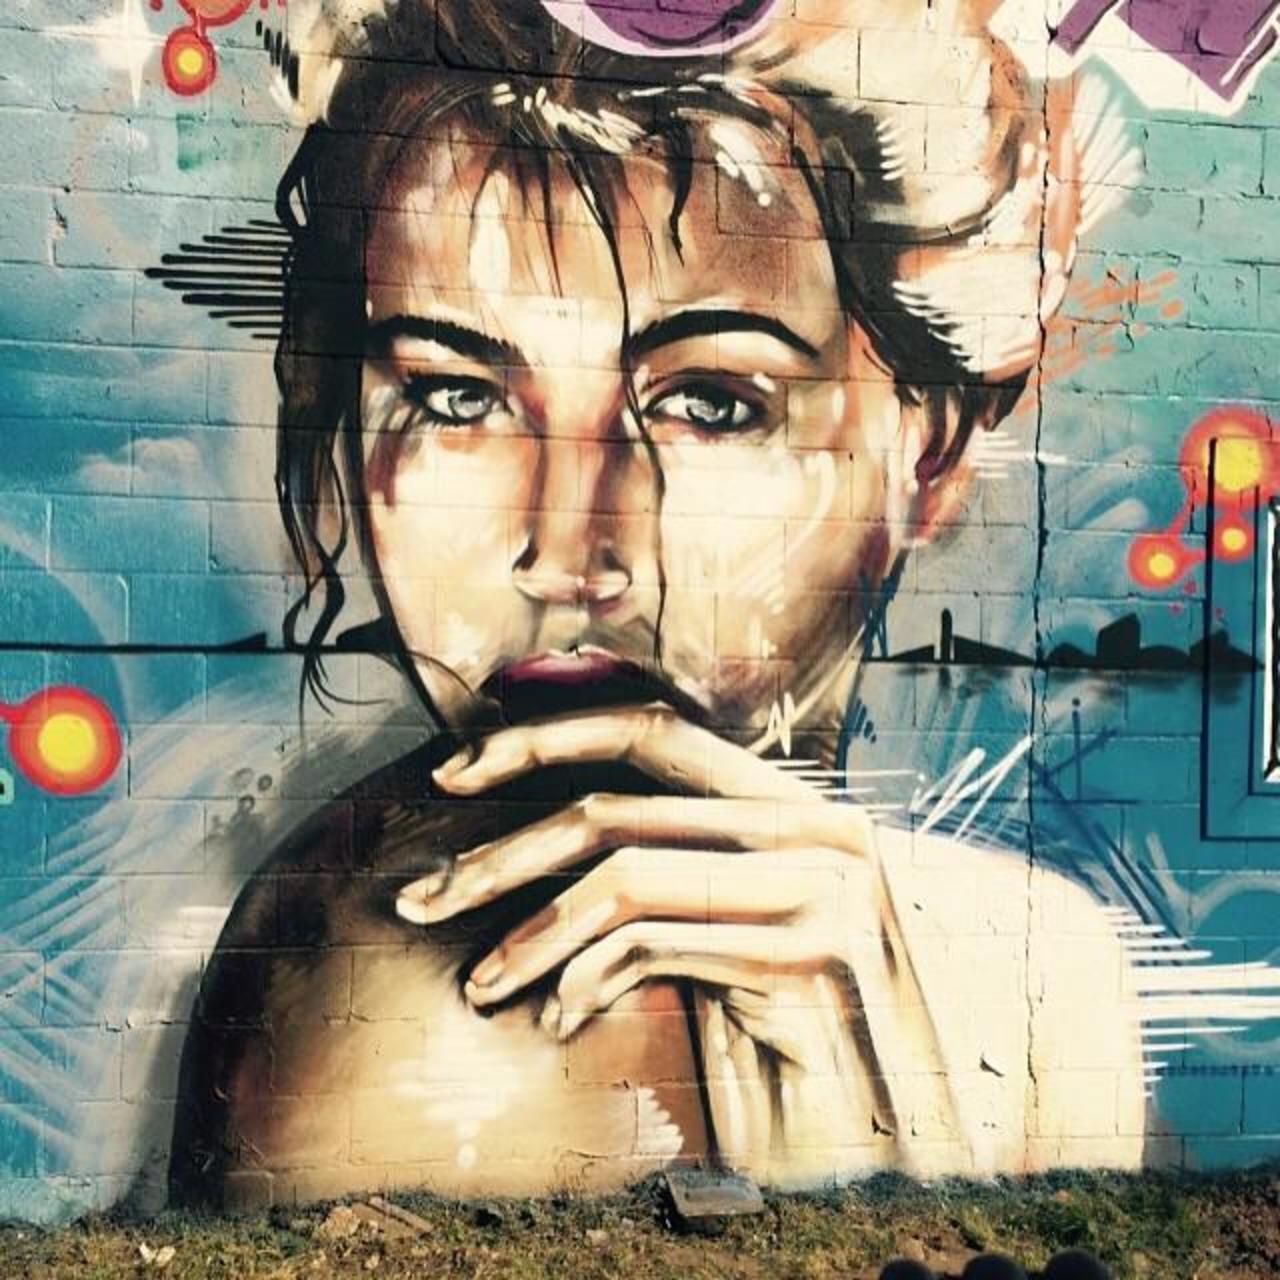 RT @artpushr: via #thehigherups "http://ift.tt/1MSqH4k" #graffiti #streetart http://t.co/lSSuhukxXf